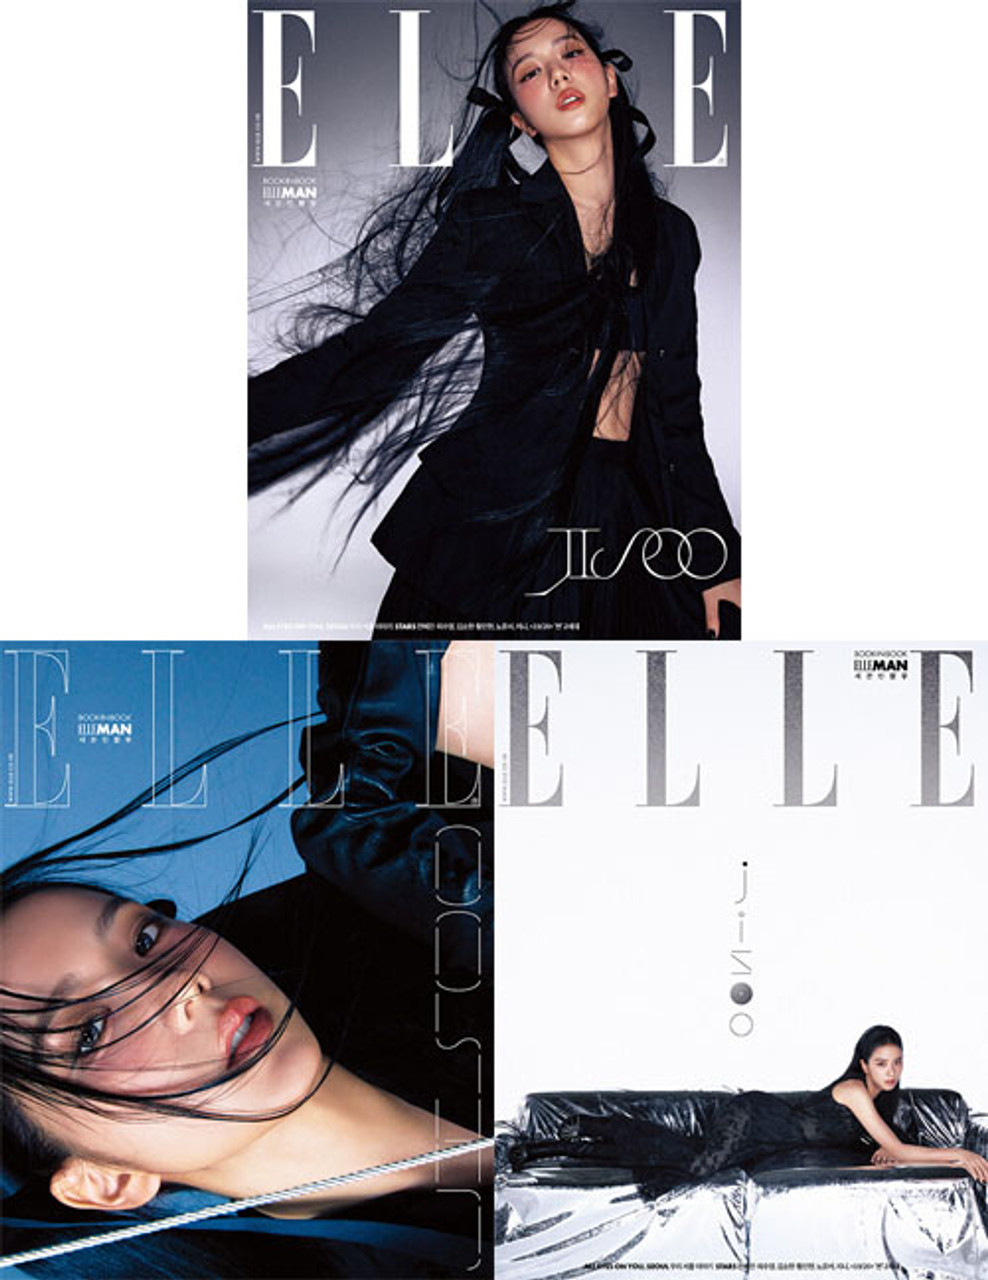 BLACKPINK Rosé for ELLE Korea Magazine June 2021 Issue